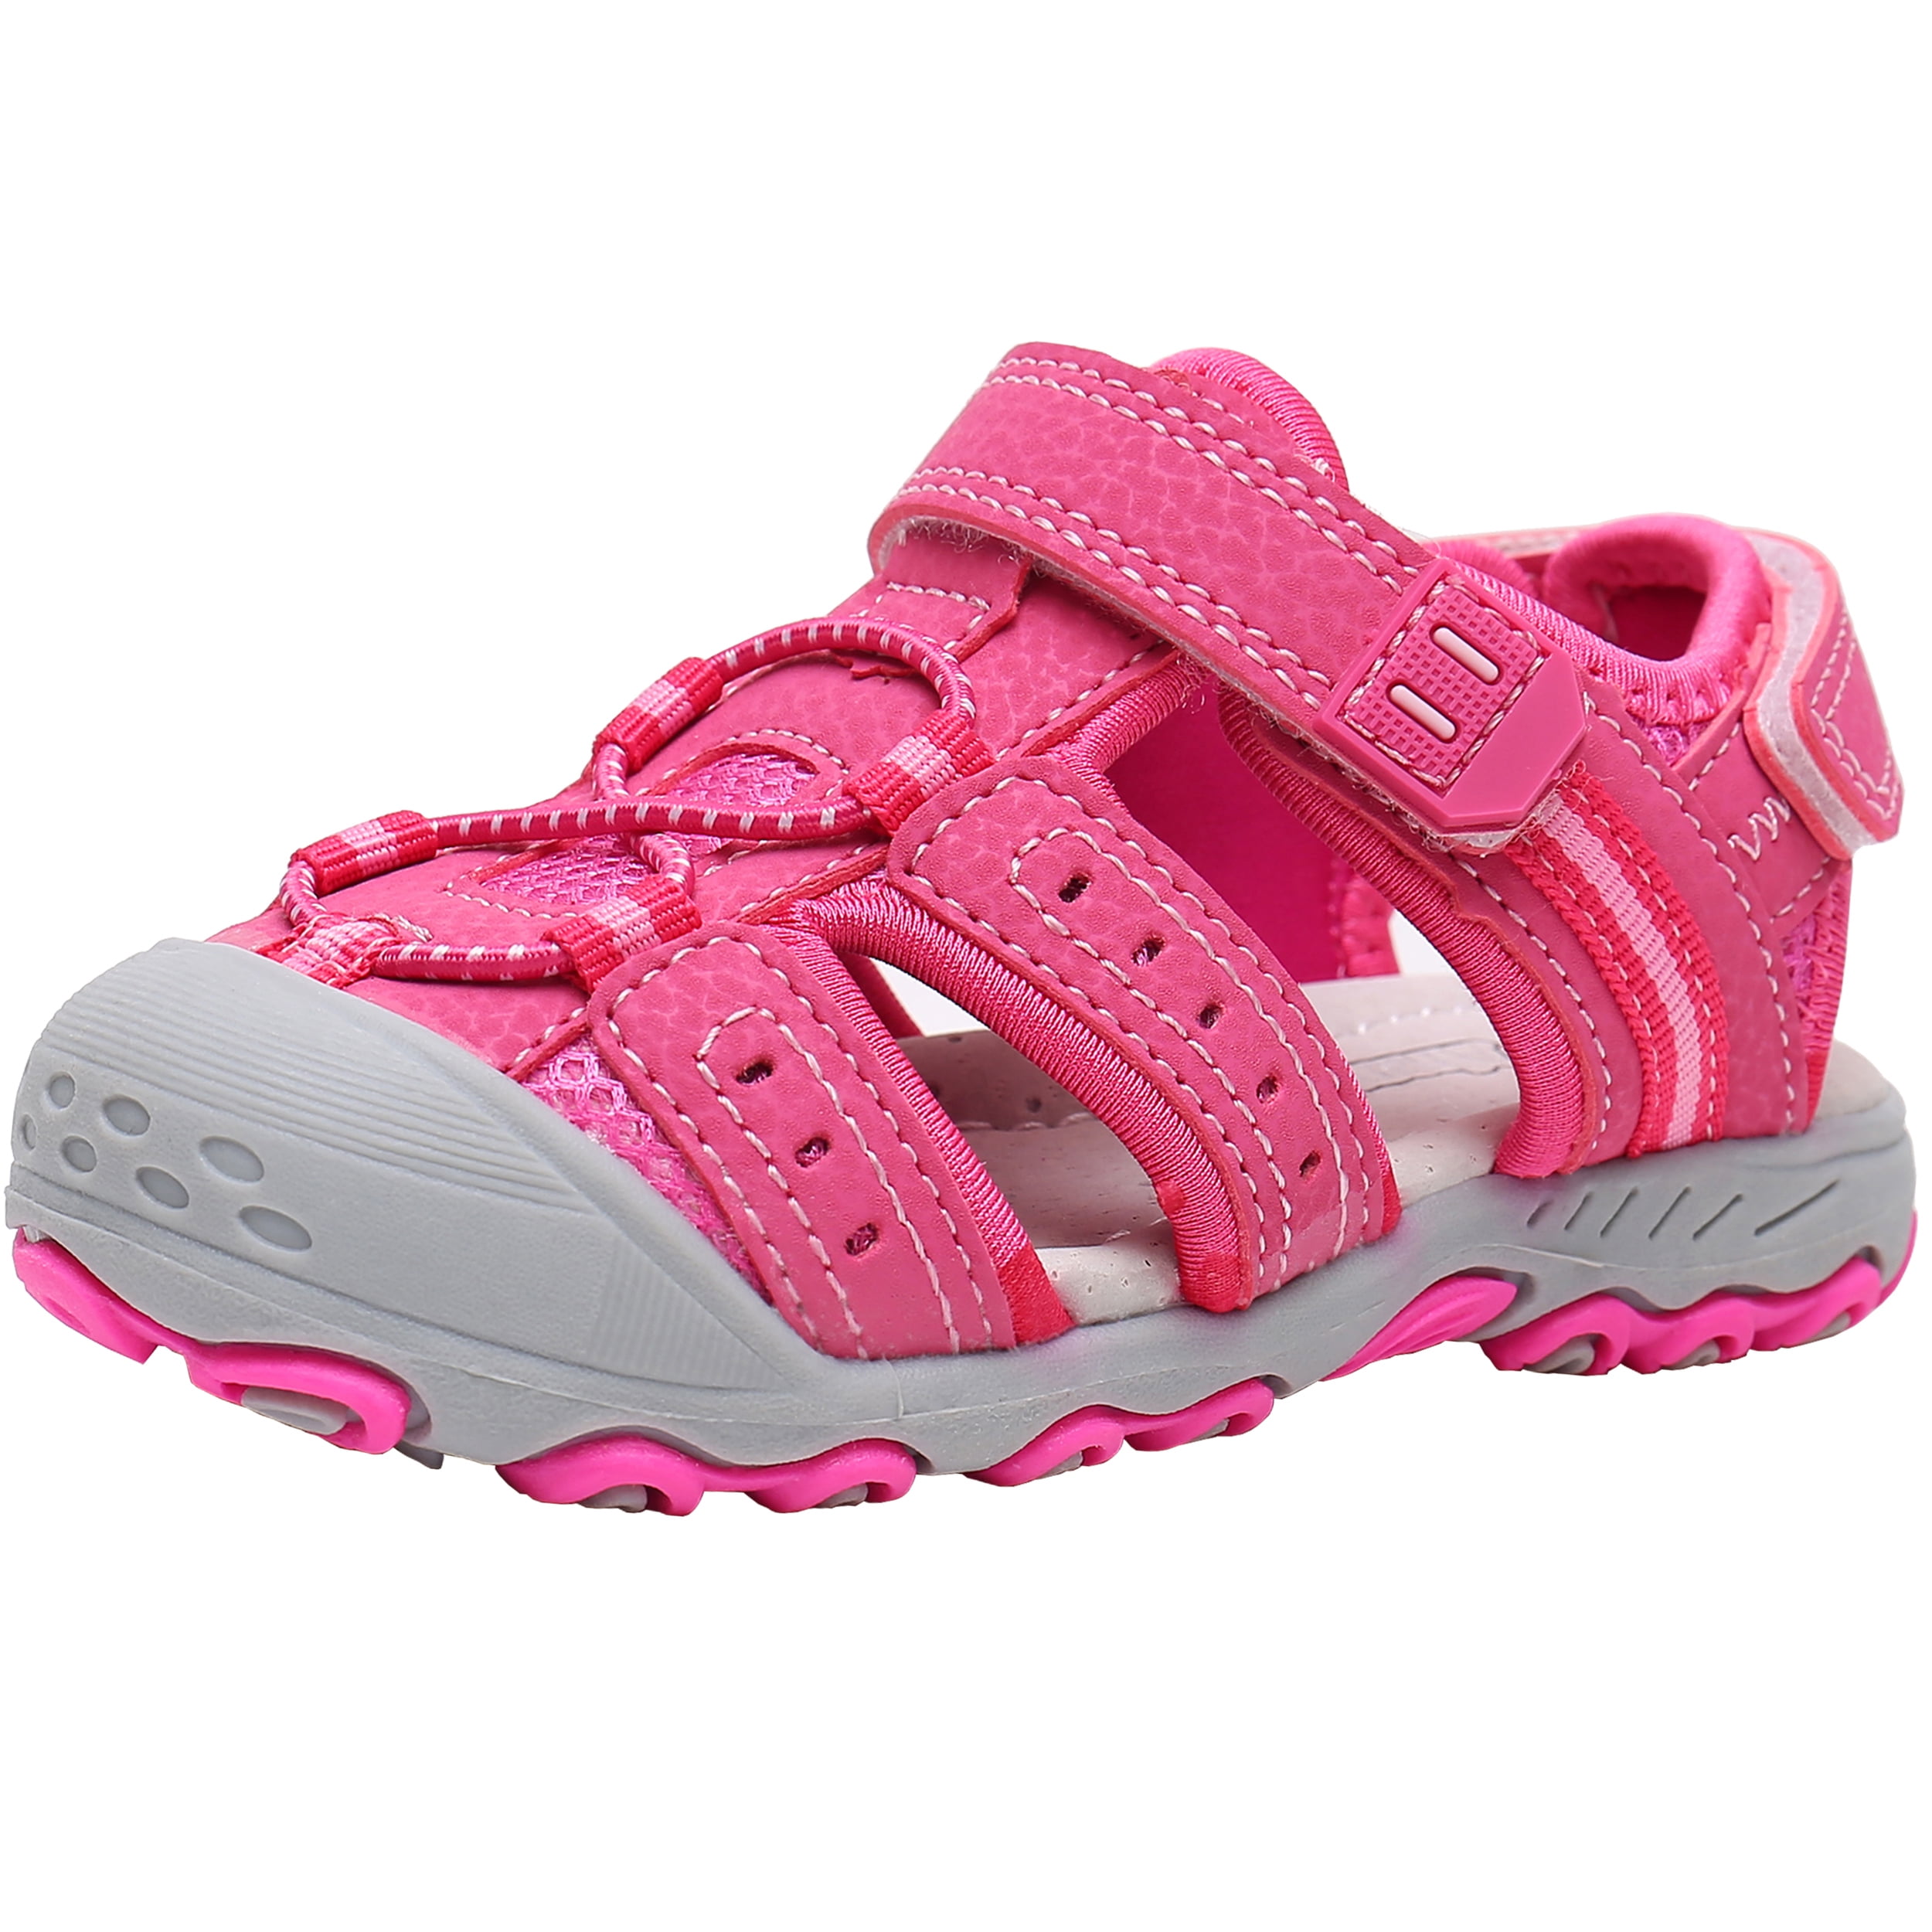 Ahannie Boys Girls Outdoor Sport Sandals,Kids Closed Toe Beach Sandals Toddler Summer Sandals 